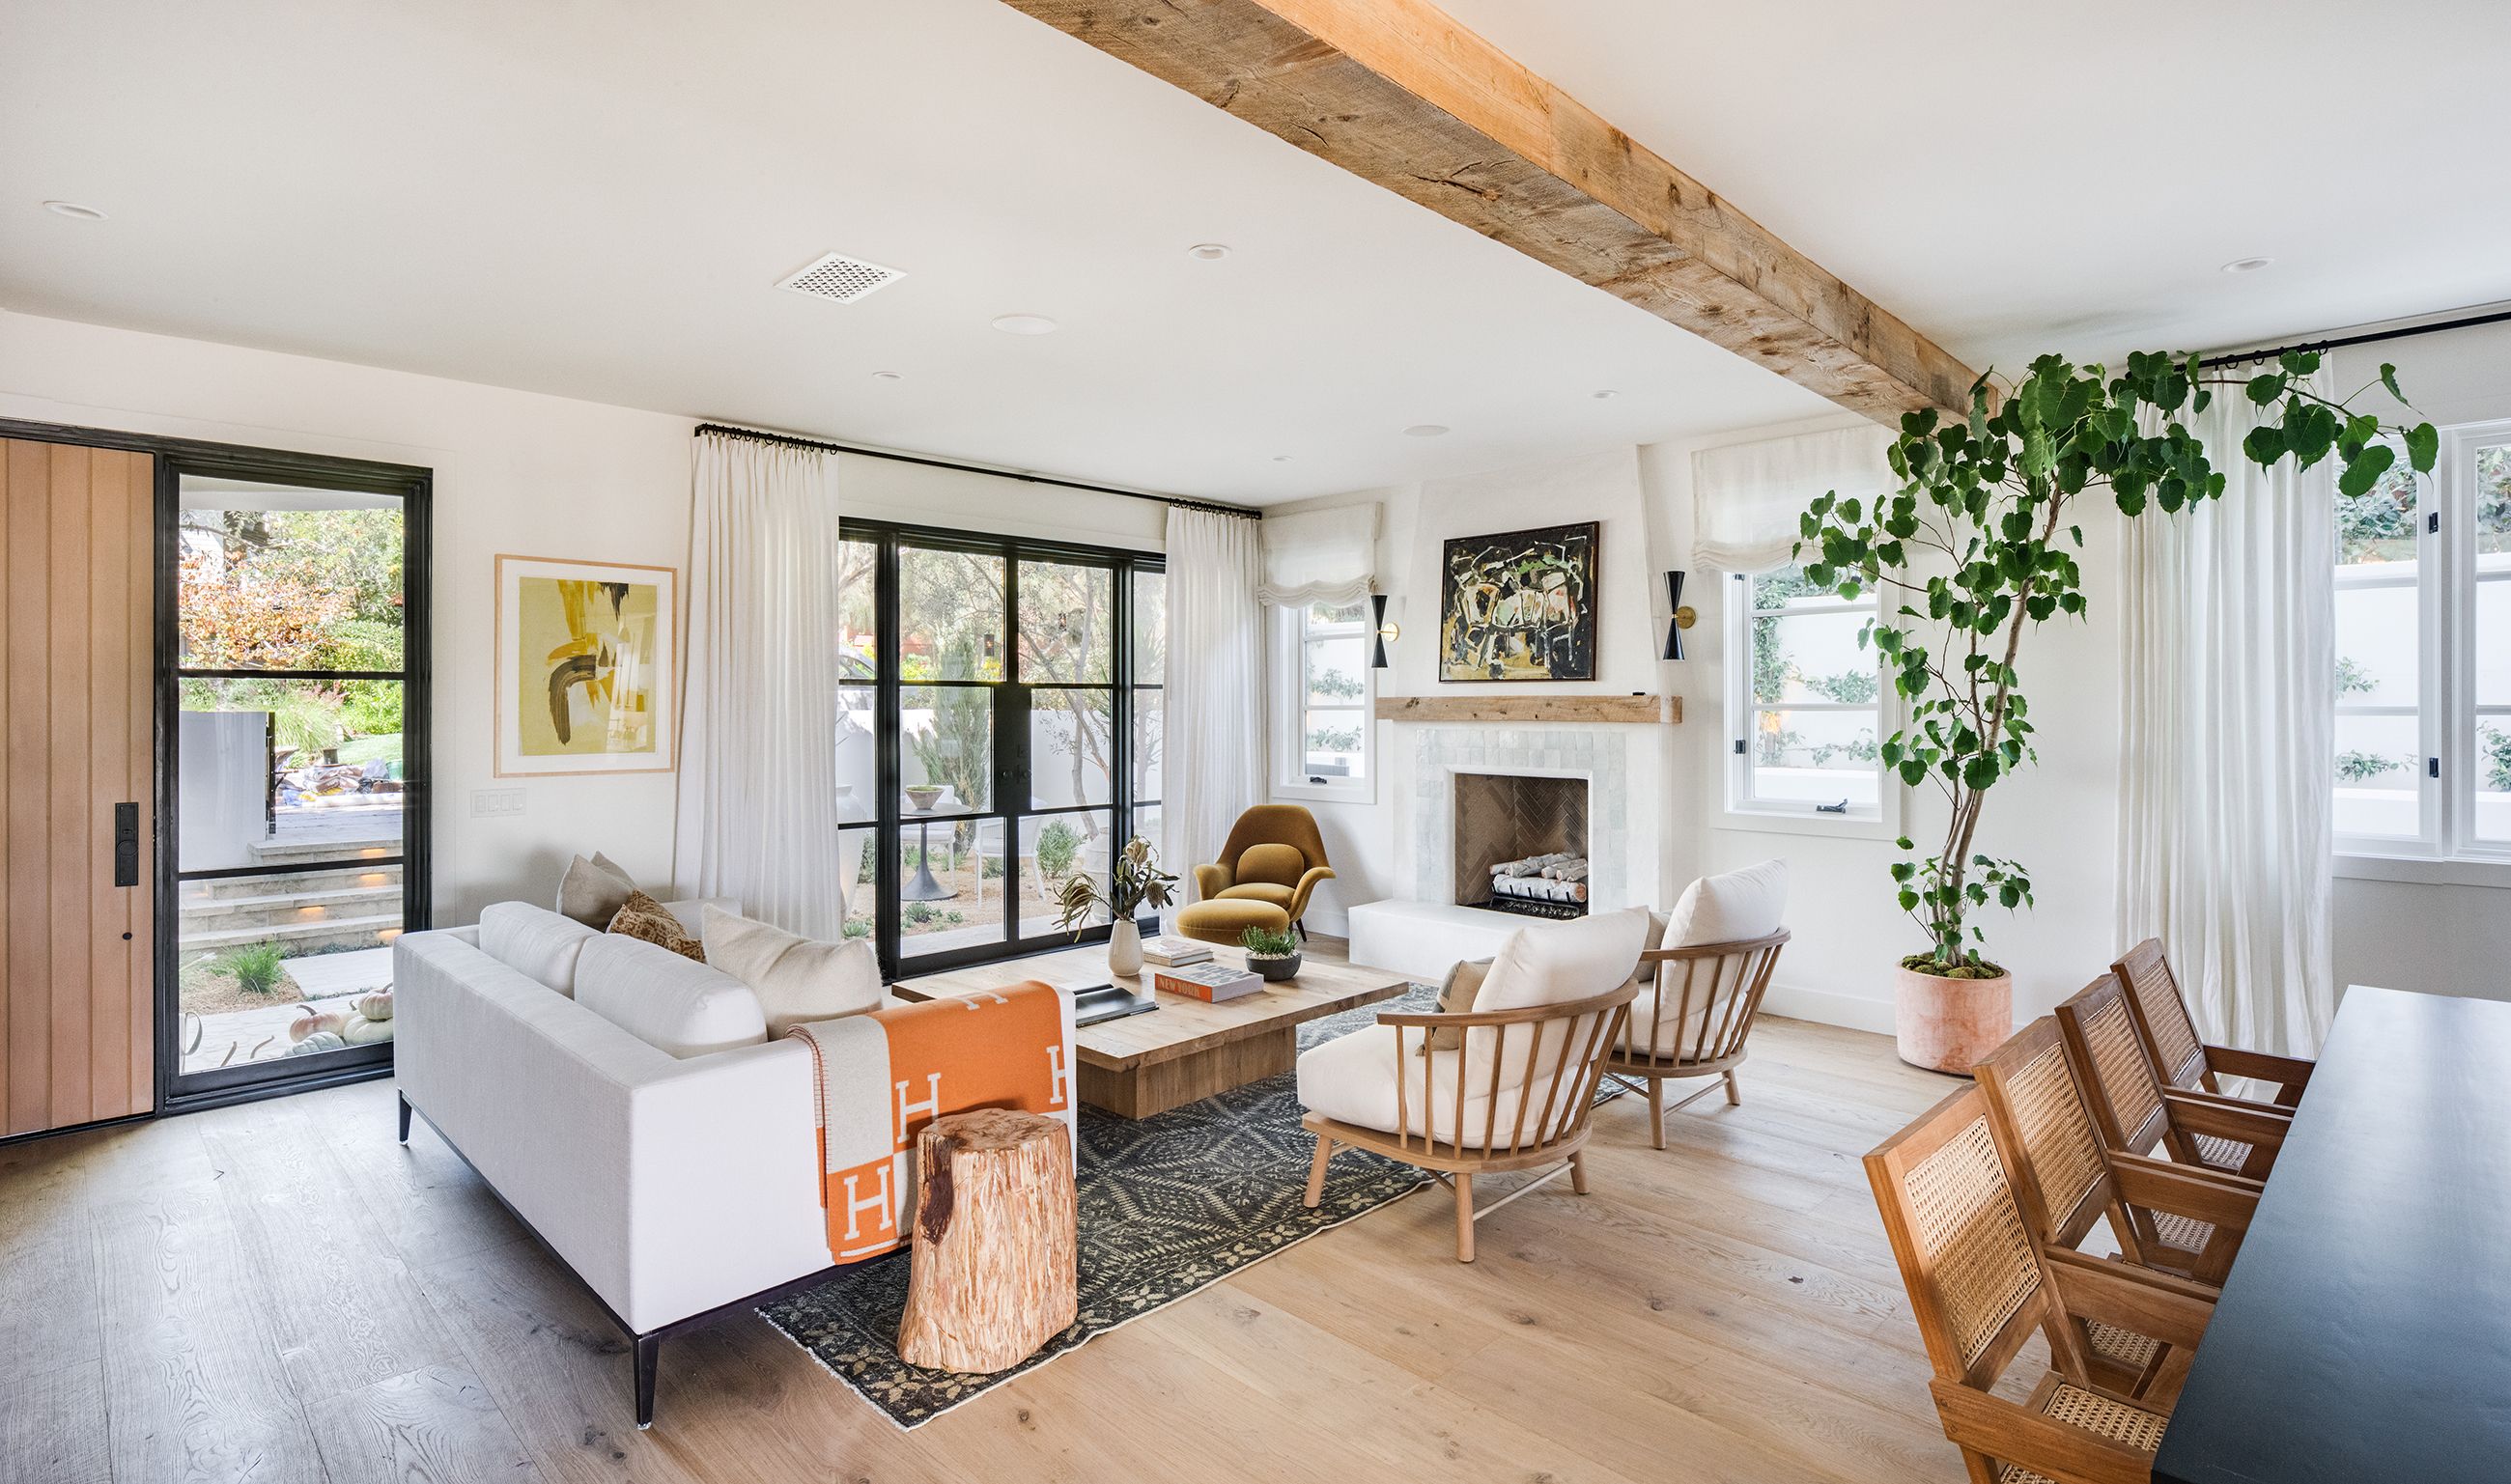 70 Stunning Living Room Ideas Chic, Simple Elegant Living Room Design